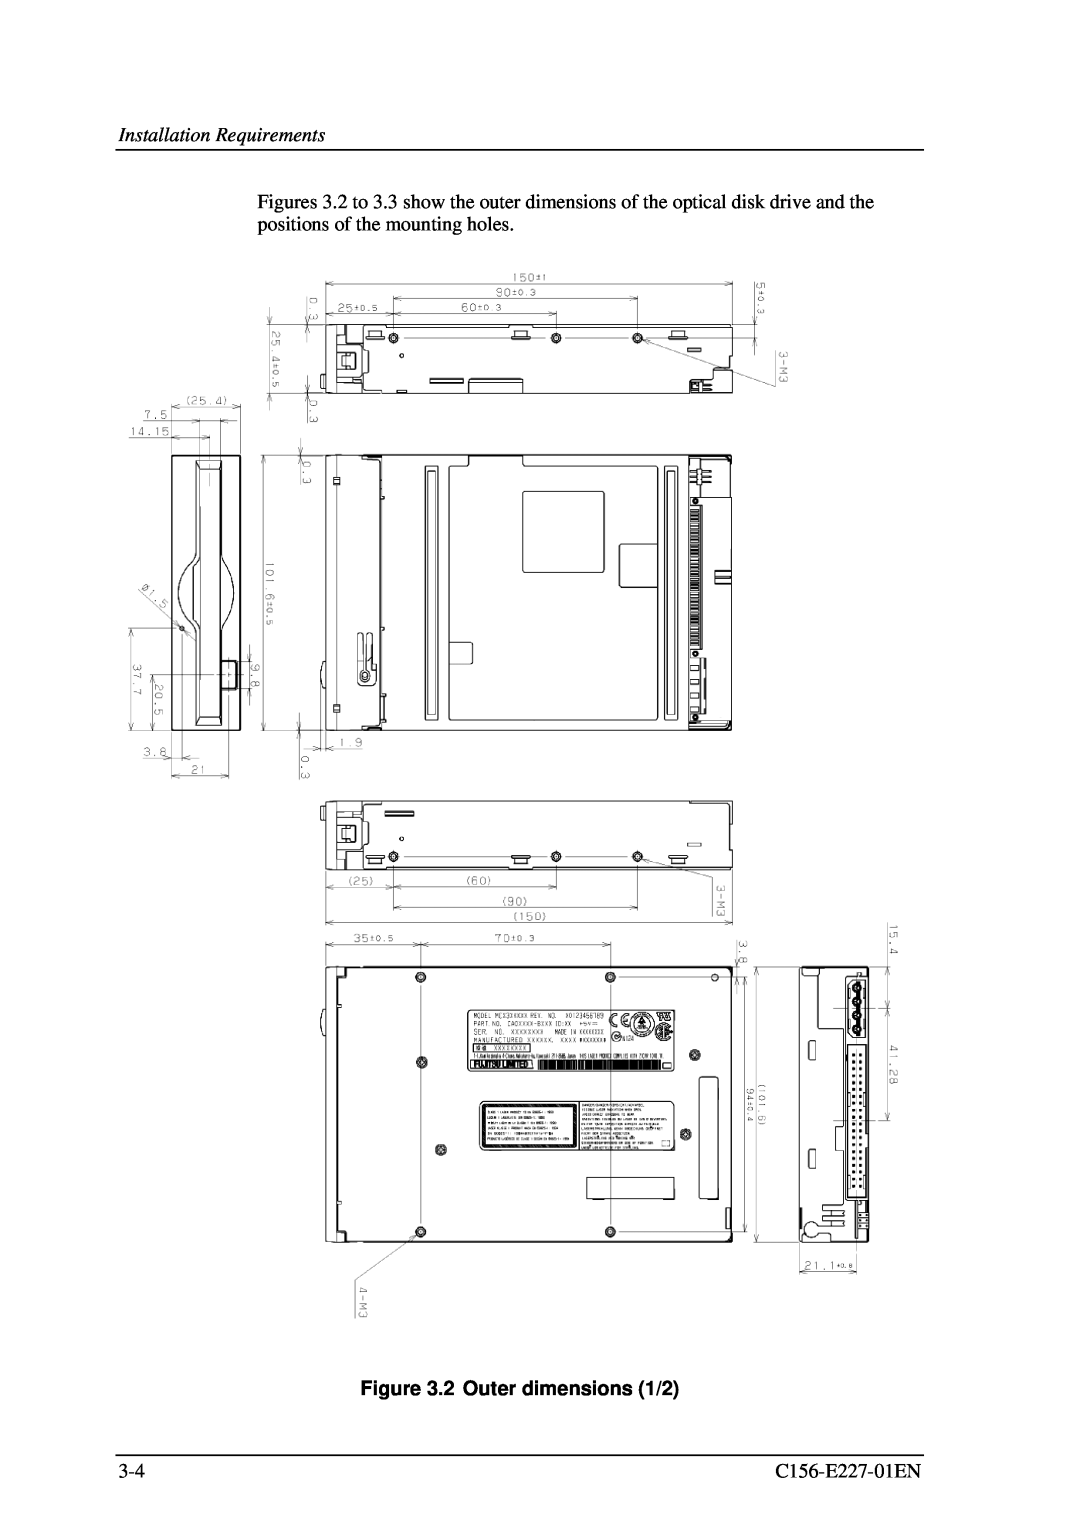 Fujitsu MCM3064AP, MCM3130AP manual 2 Outer dimensions 1/2, Installation Requirements, C156-E227-01EN 